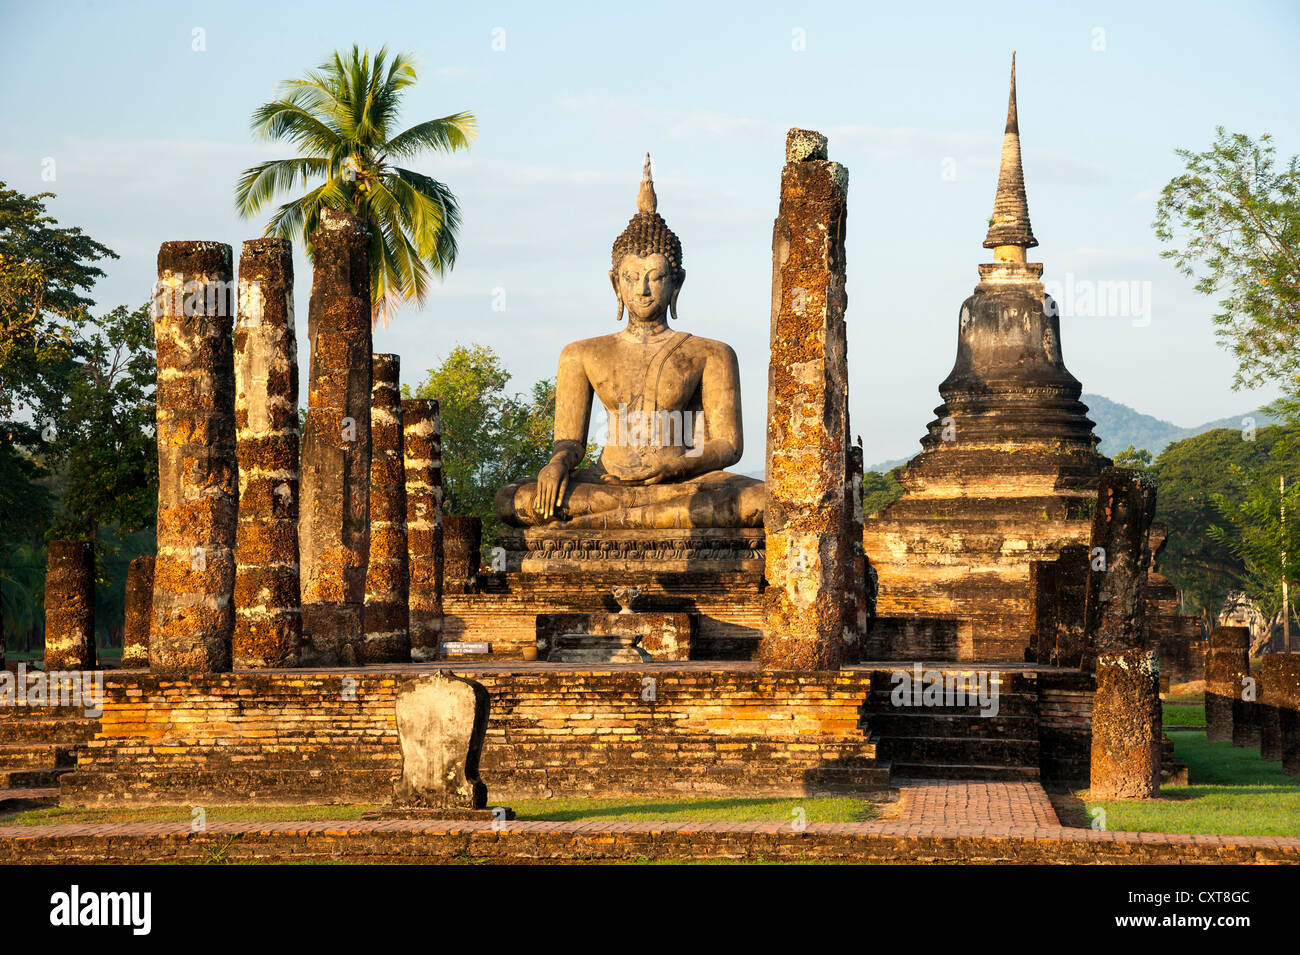 Seated Buddha statue, Wat Mahathat temple, Sukhothai Historical Park, UNESCO World Heritage site, Northern Thailand, Thailand Stock Photo